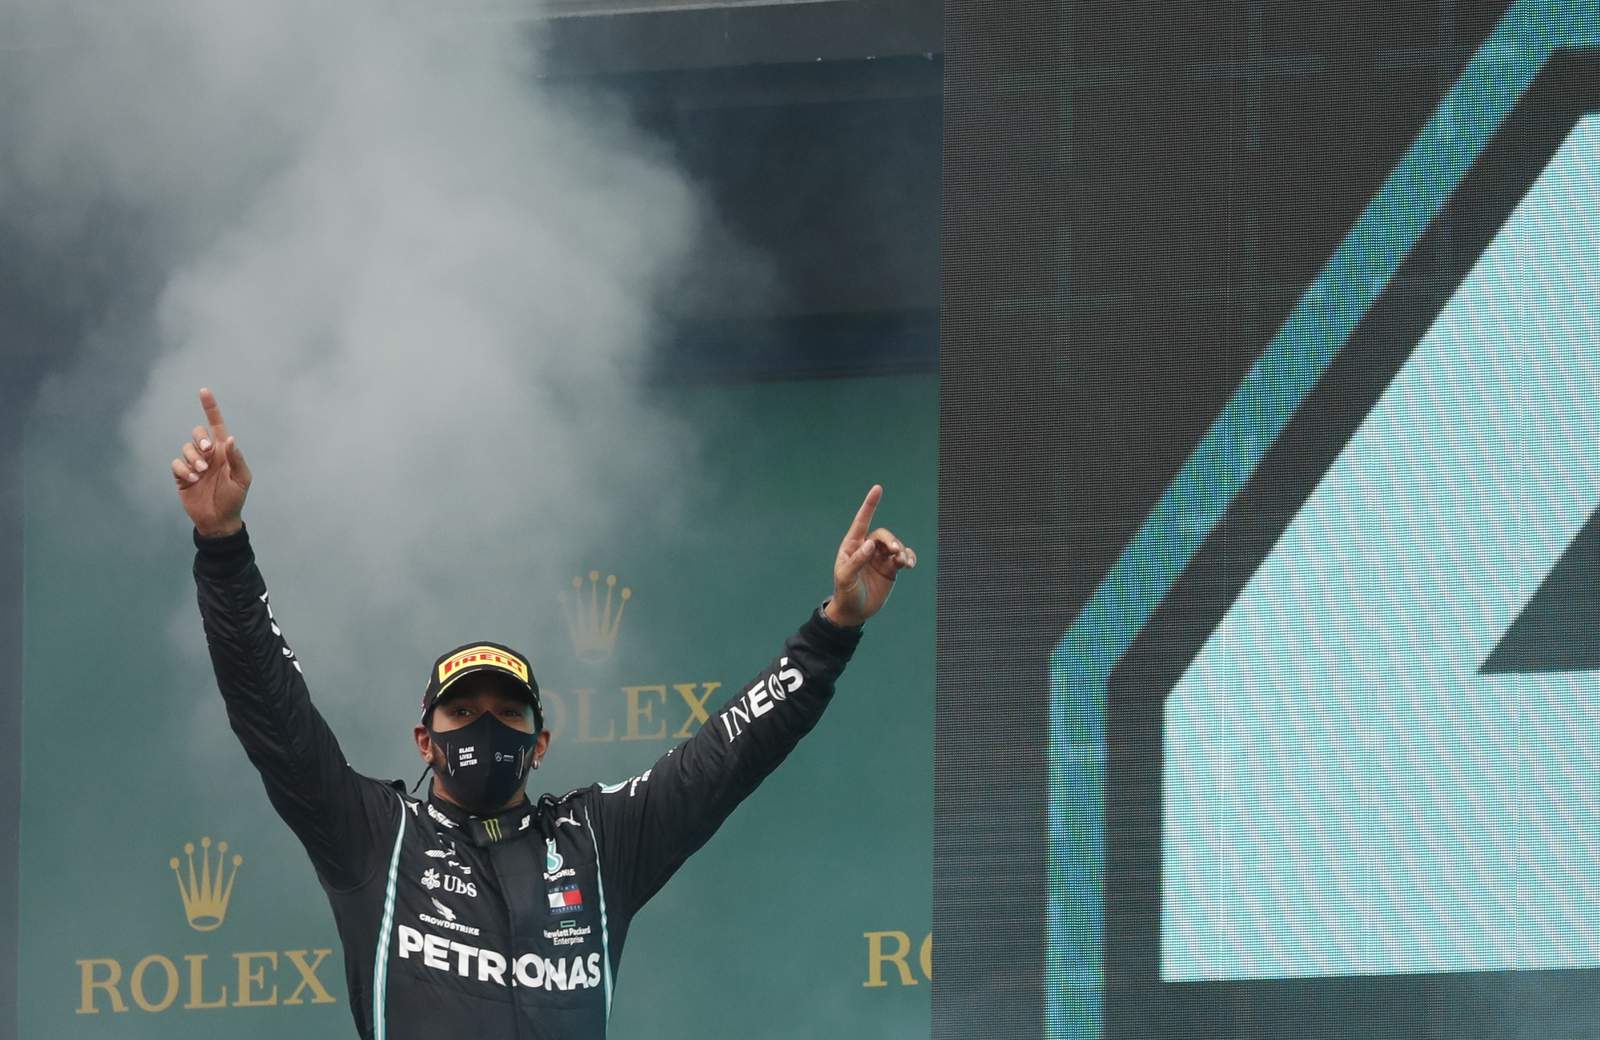 Hamilton clinches record 7th F1 title with win at Turkish GP